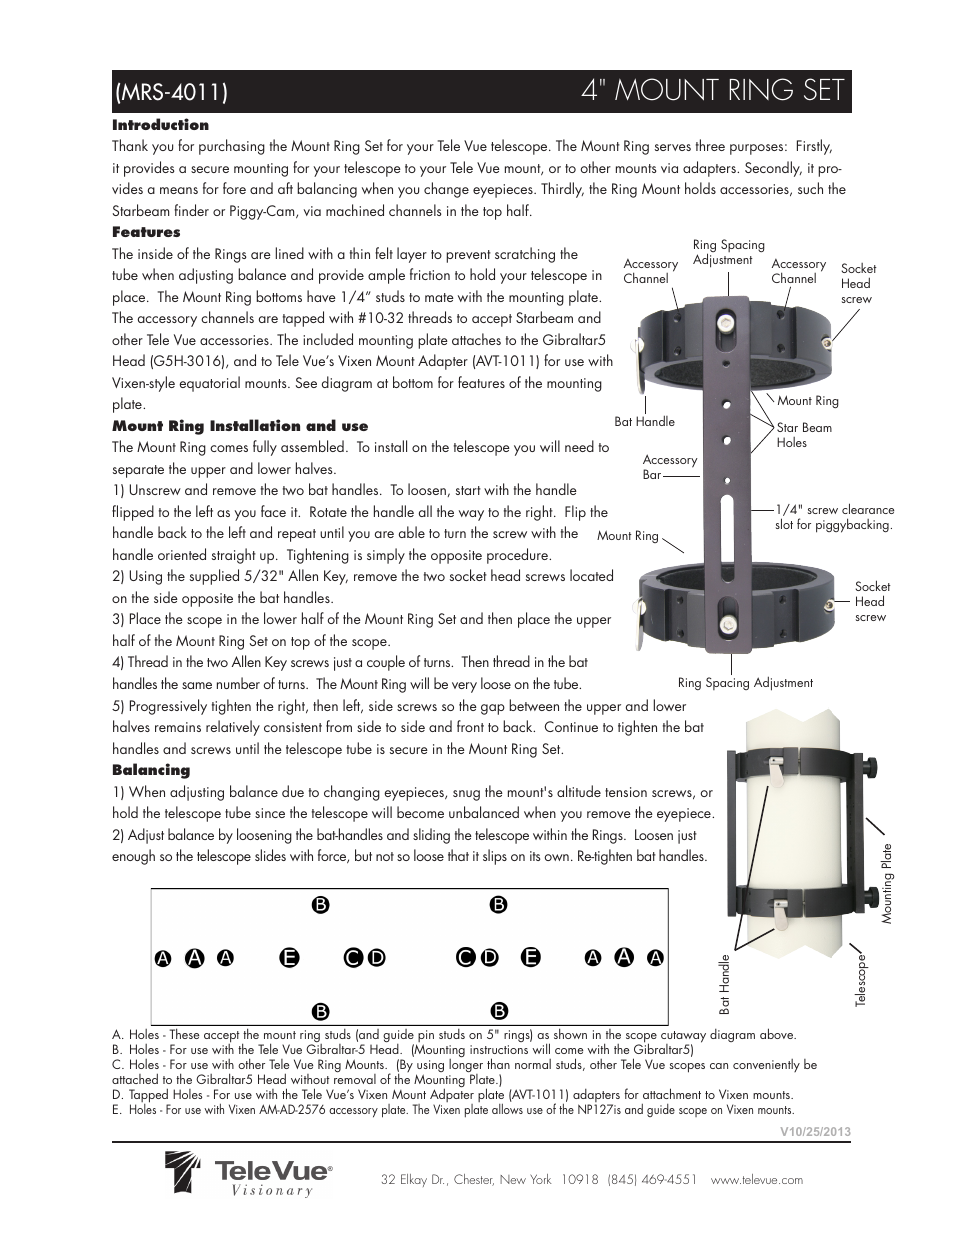 Tele Vue 4inch Mount Ring Set (MRS-4011) User Manual | 1 page